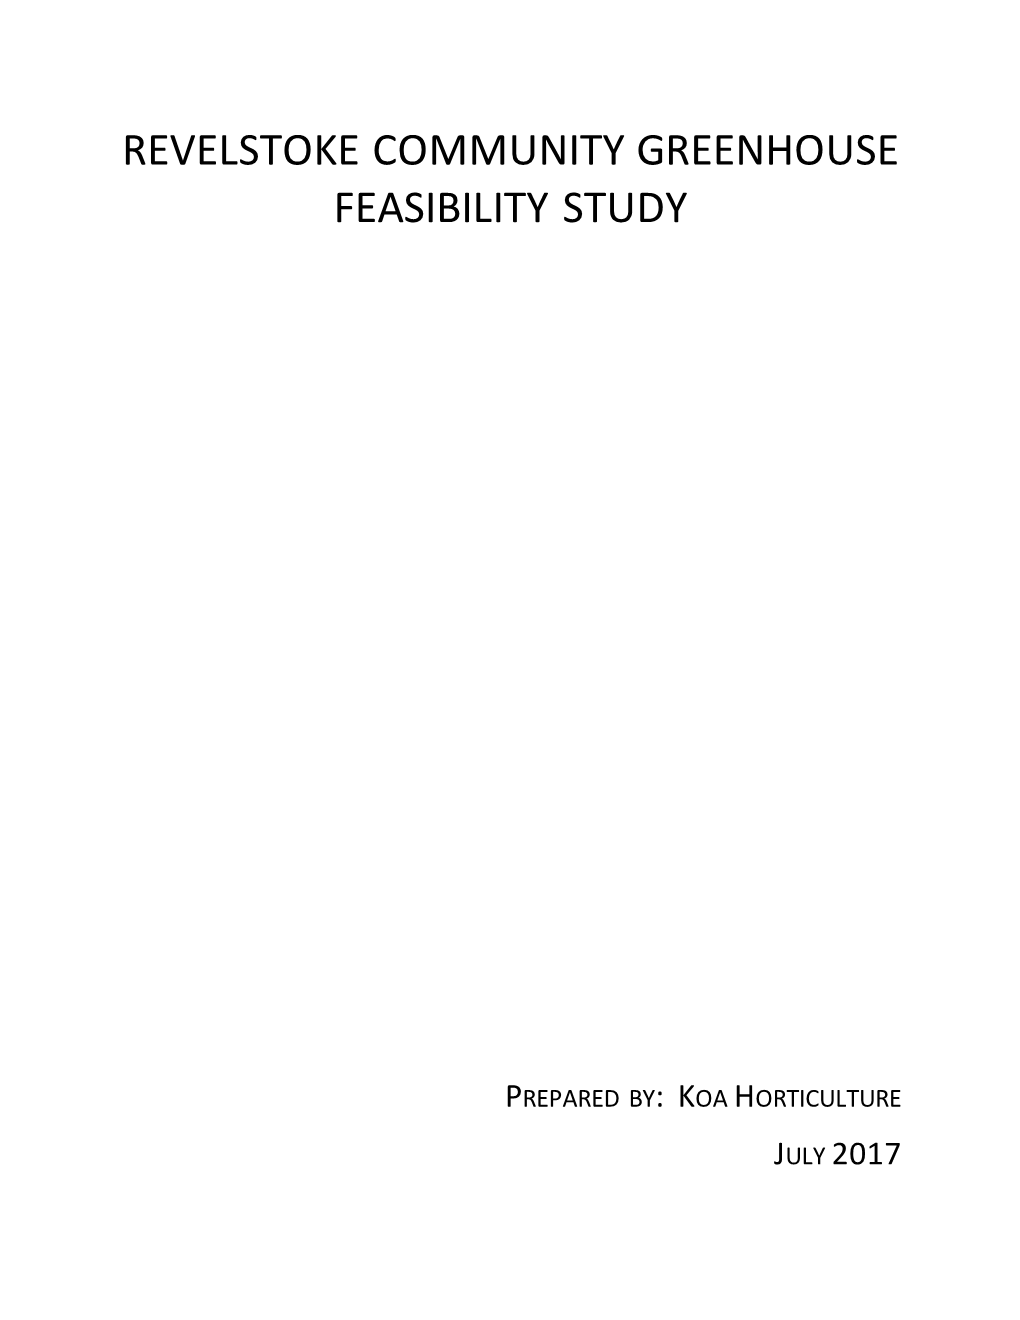 Revelstoke Community Greenhouse Feasibility Study